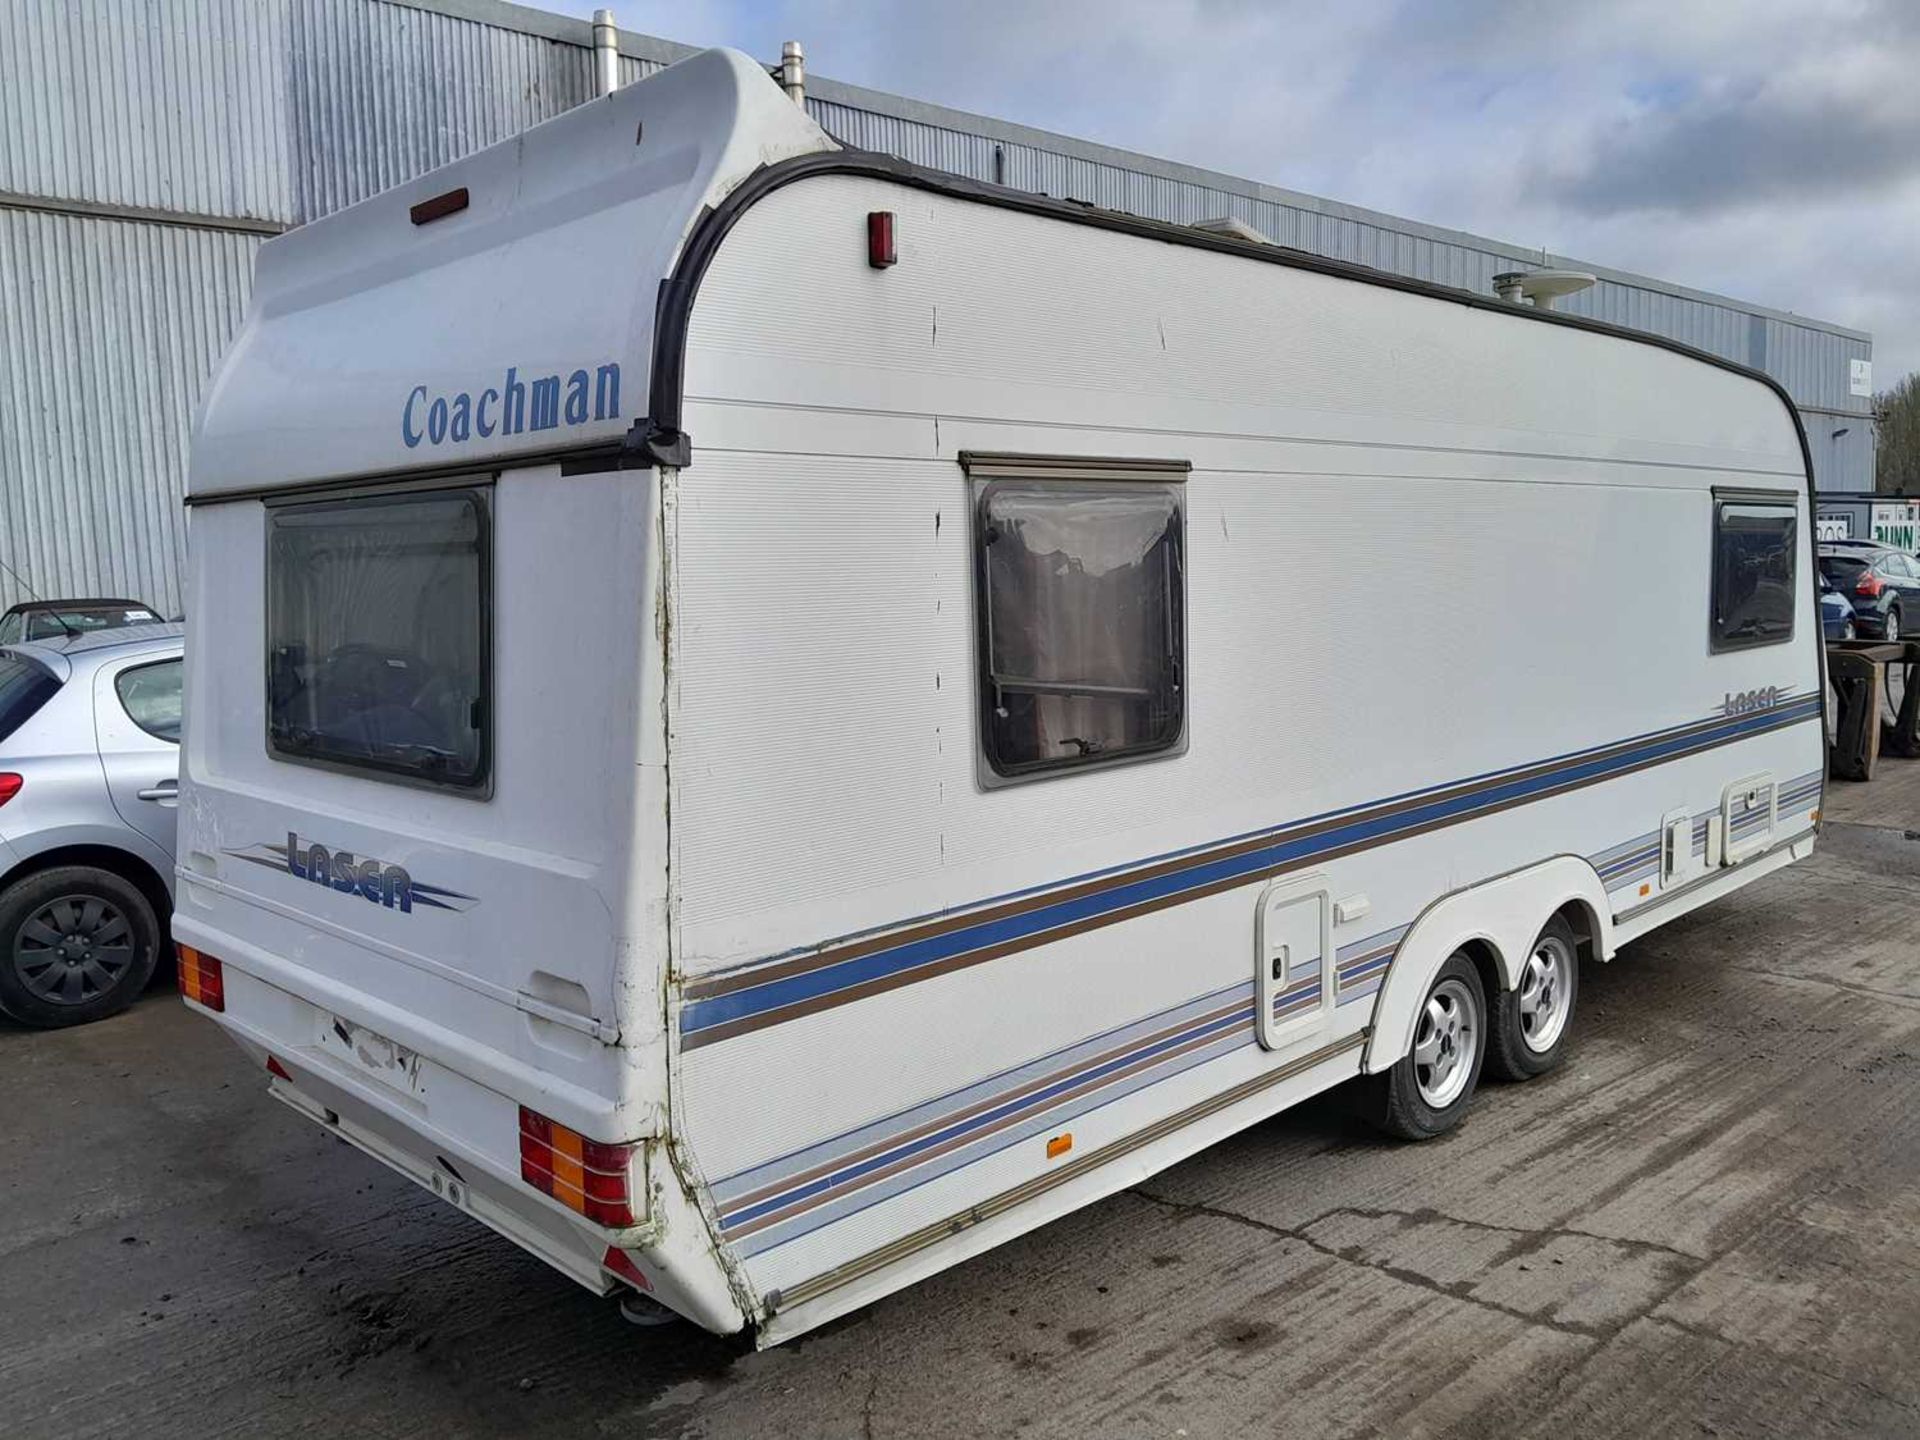 Coachman LASER 590/5 Twin Axle 2 Berth Caravan, Kitchen, Lounge, Toilet - Image 3 of 15